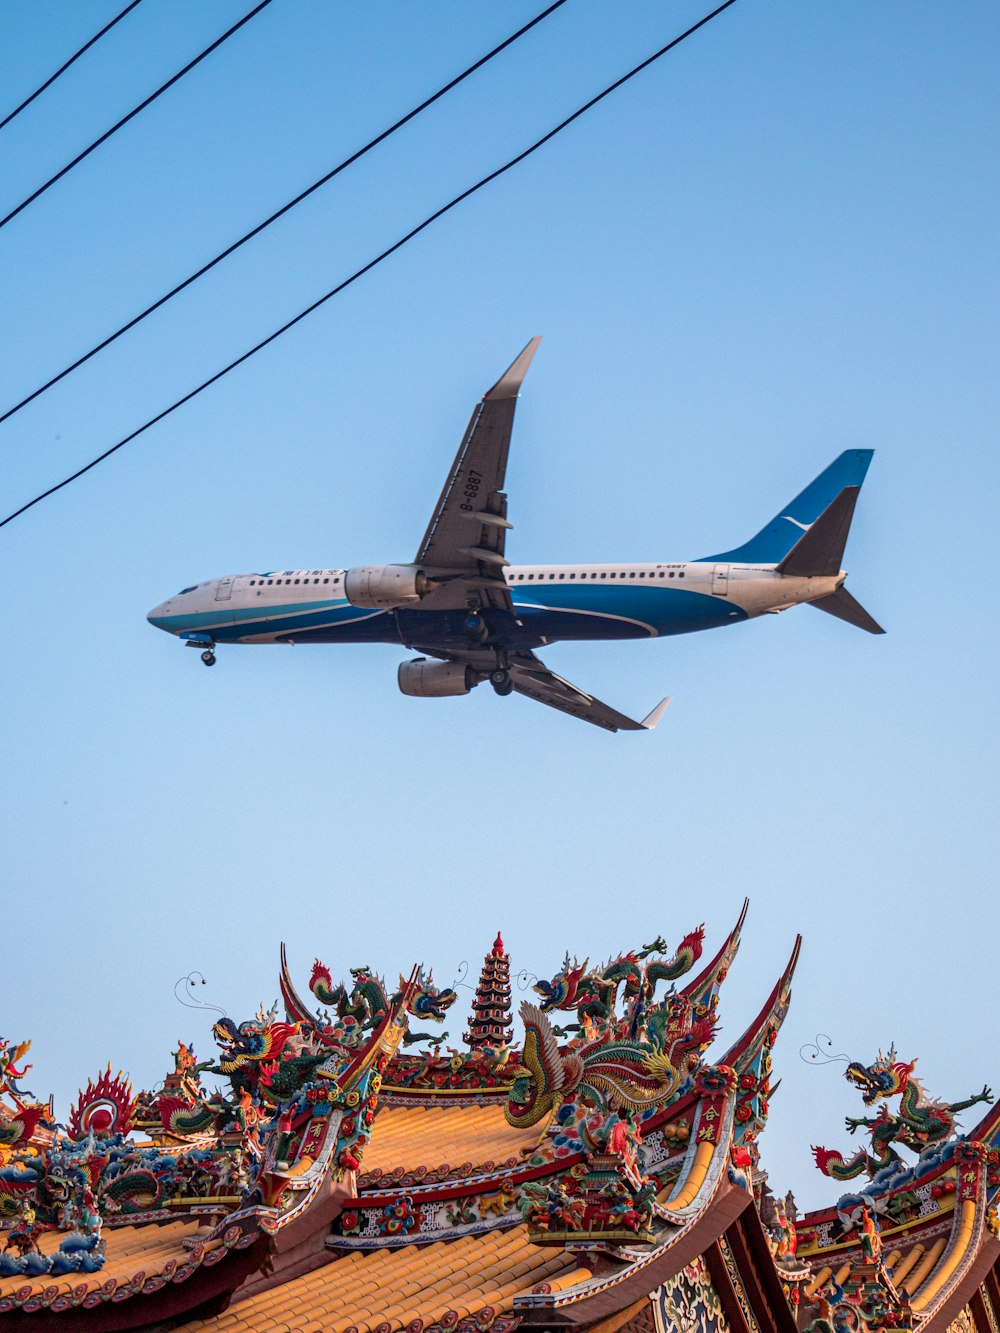 Un avion survolant un carnaval